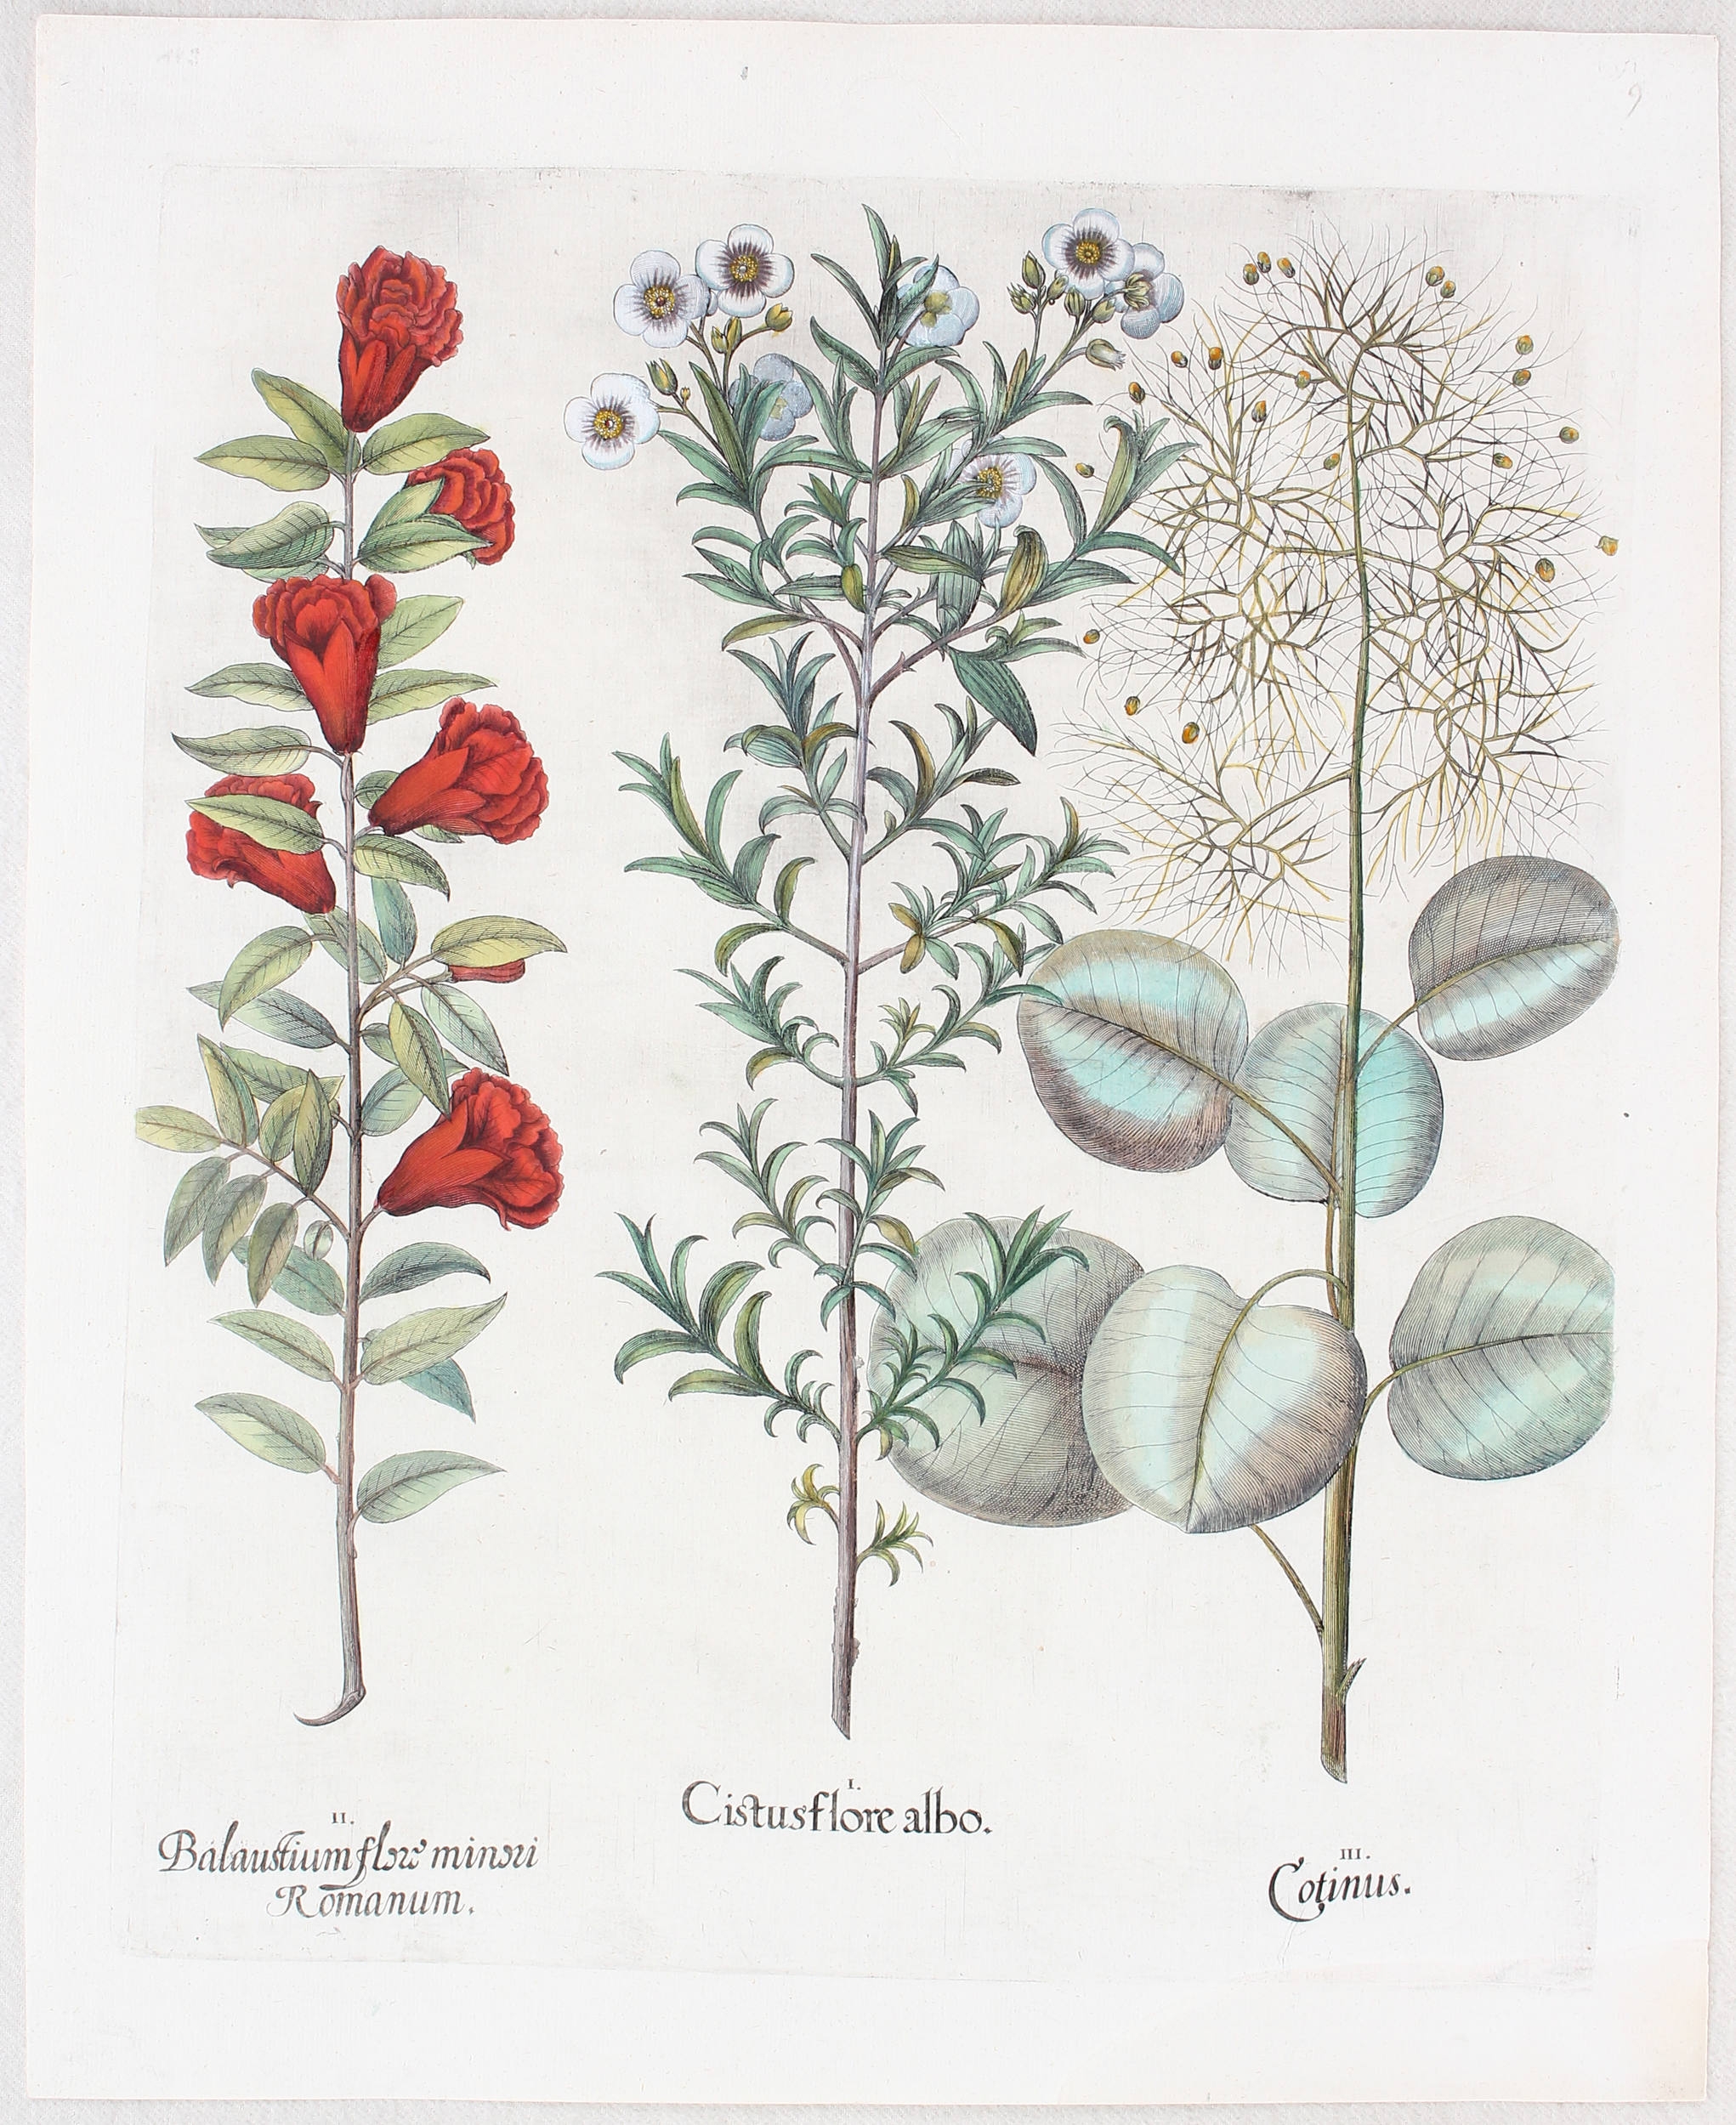 Cistusflore albo (&) Balaustium flore minori romanum (&) Cotinus (Cistrose aus Montpellier, Blühender Granatapfelbaum, Perückenstrauch) by Basilius Besler